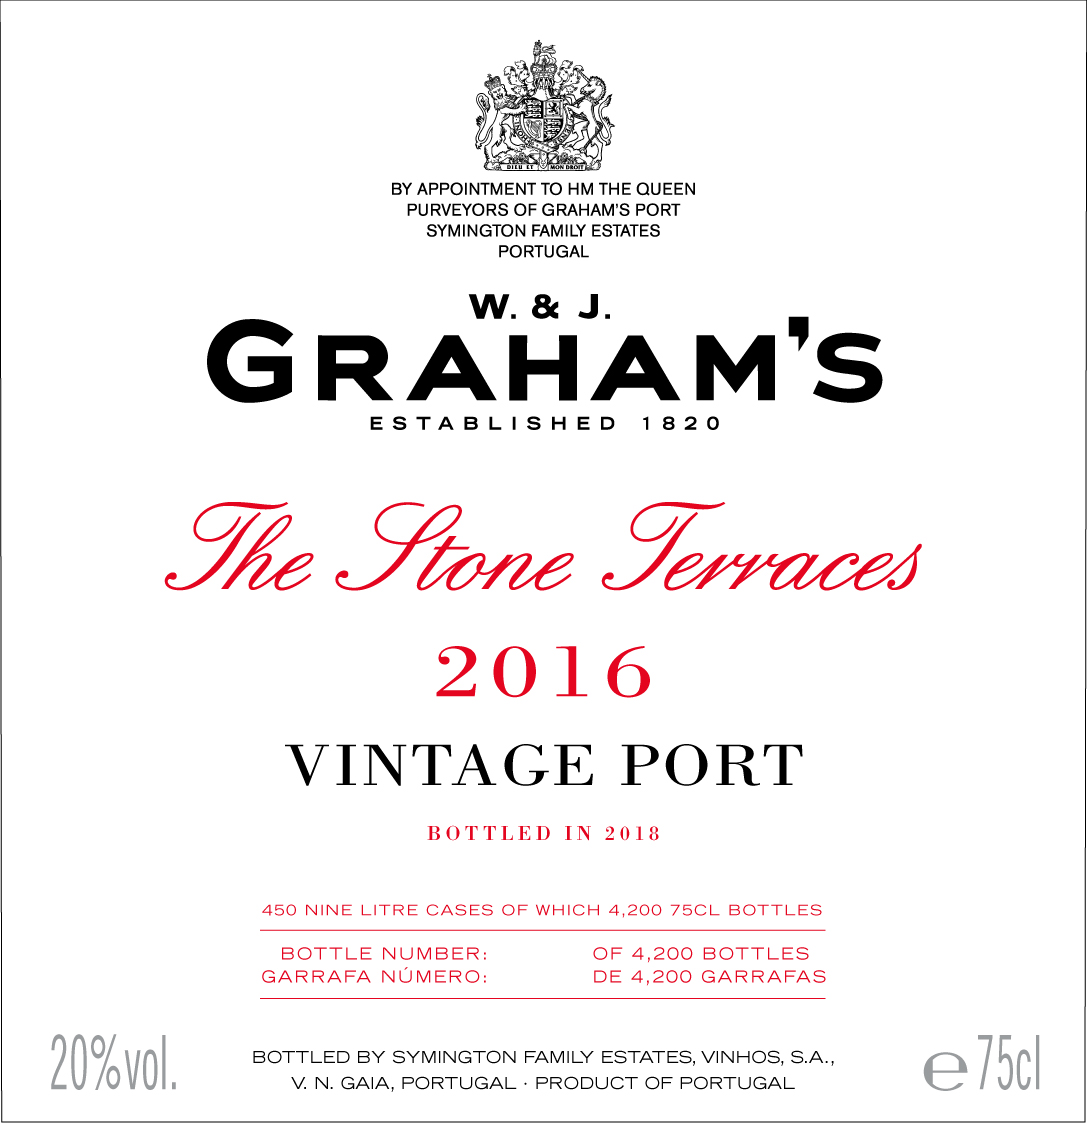 Graham's The Stone Terraces label